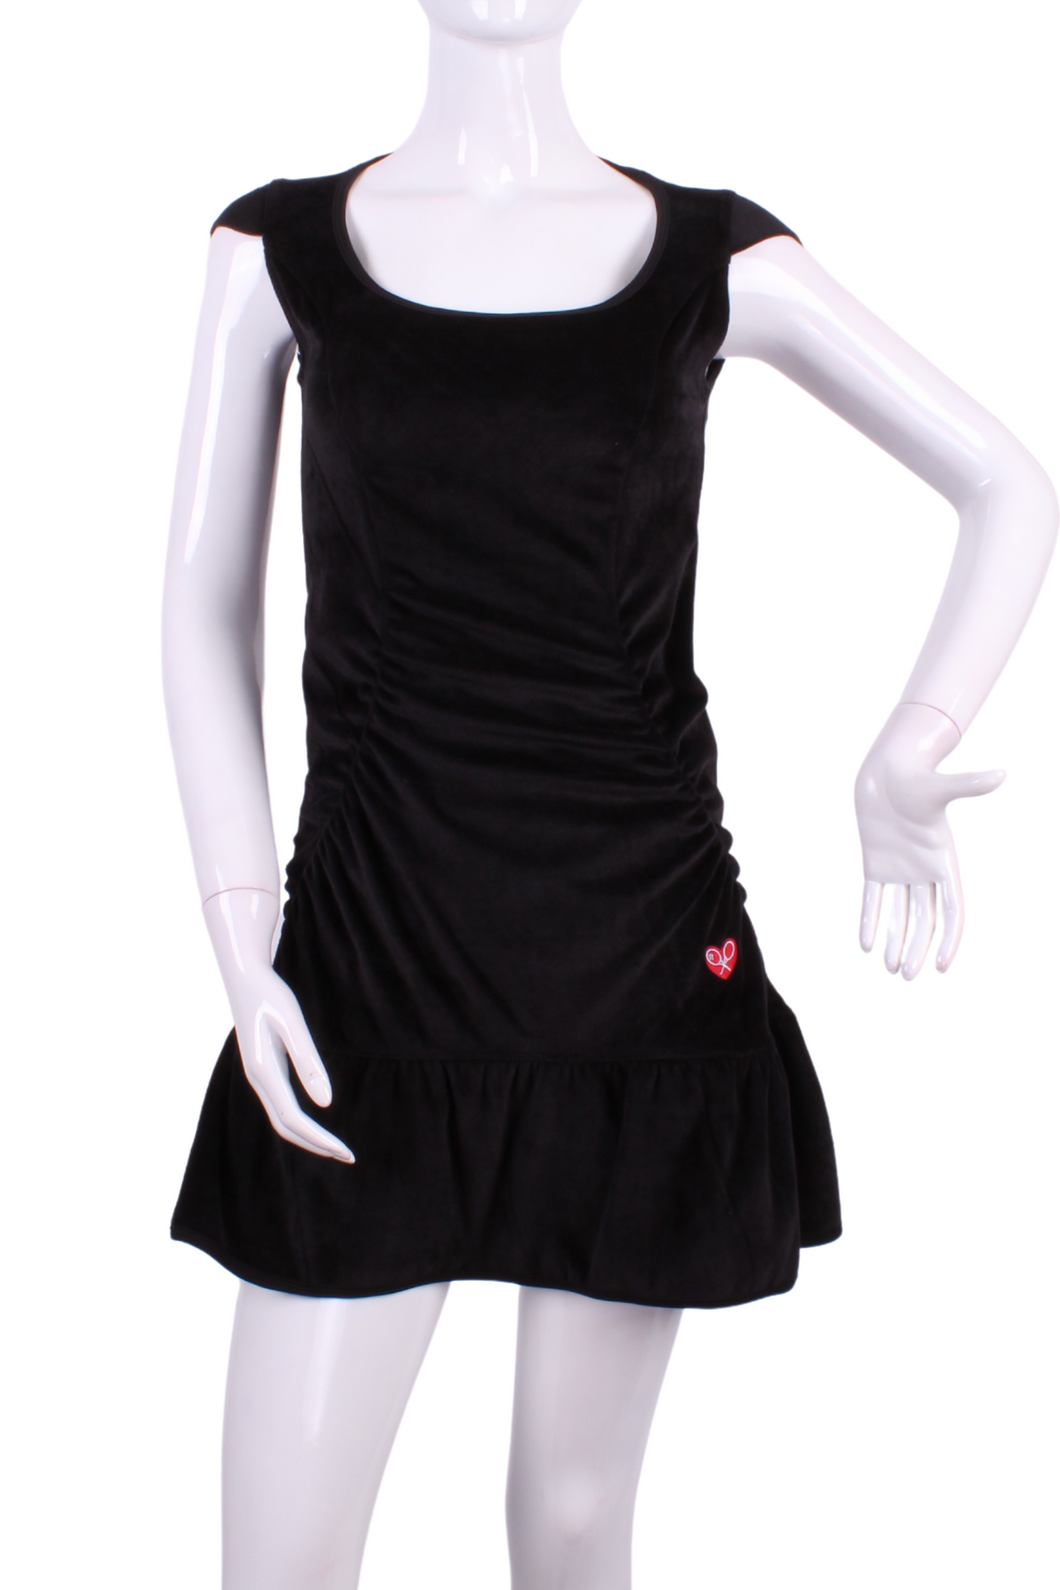 Sexy Black Mesh on Black Monroe Tennis Dress - I LOVE MY DOUBLES PARTNER!!!